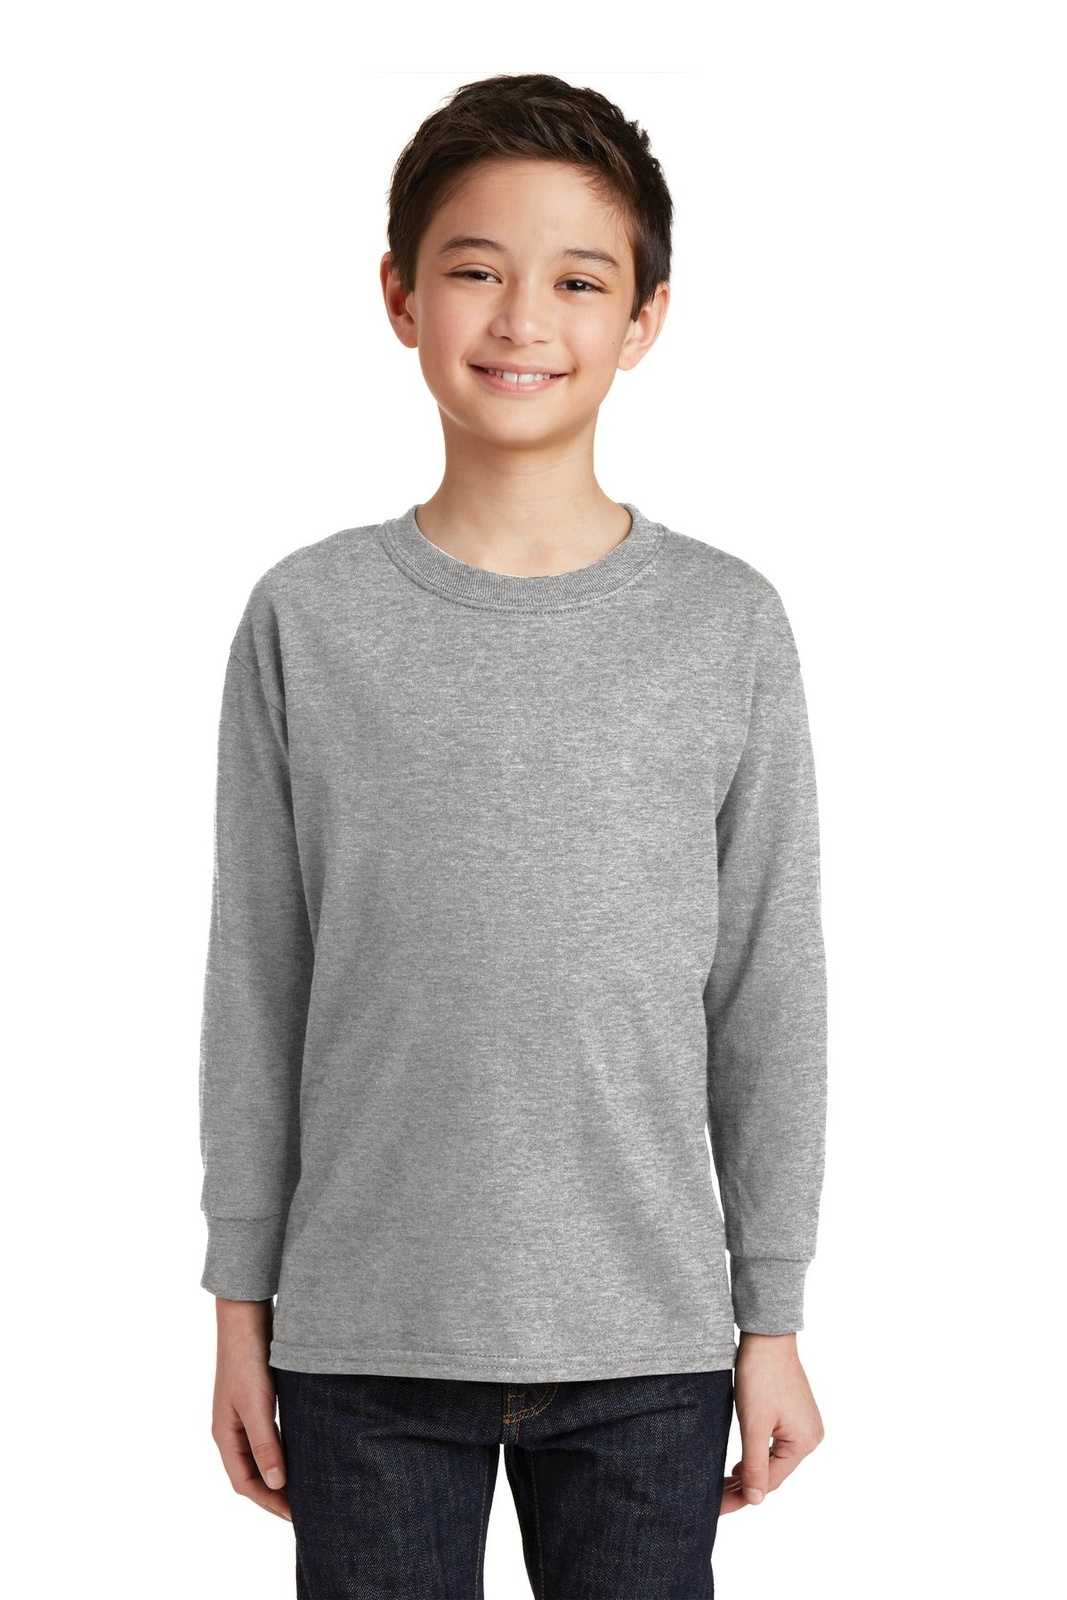 Gildan 5400B Youth Heavy Cotton 100% Cotton Long Sleeve T-Shirt - Sport Gray - HIT a Double